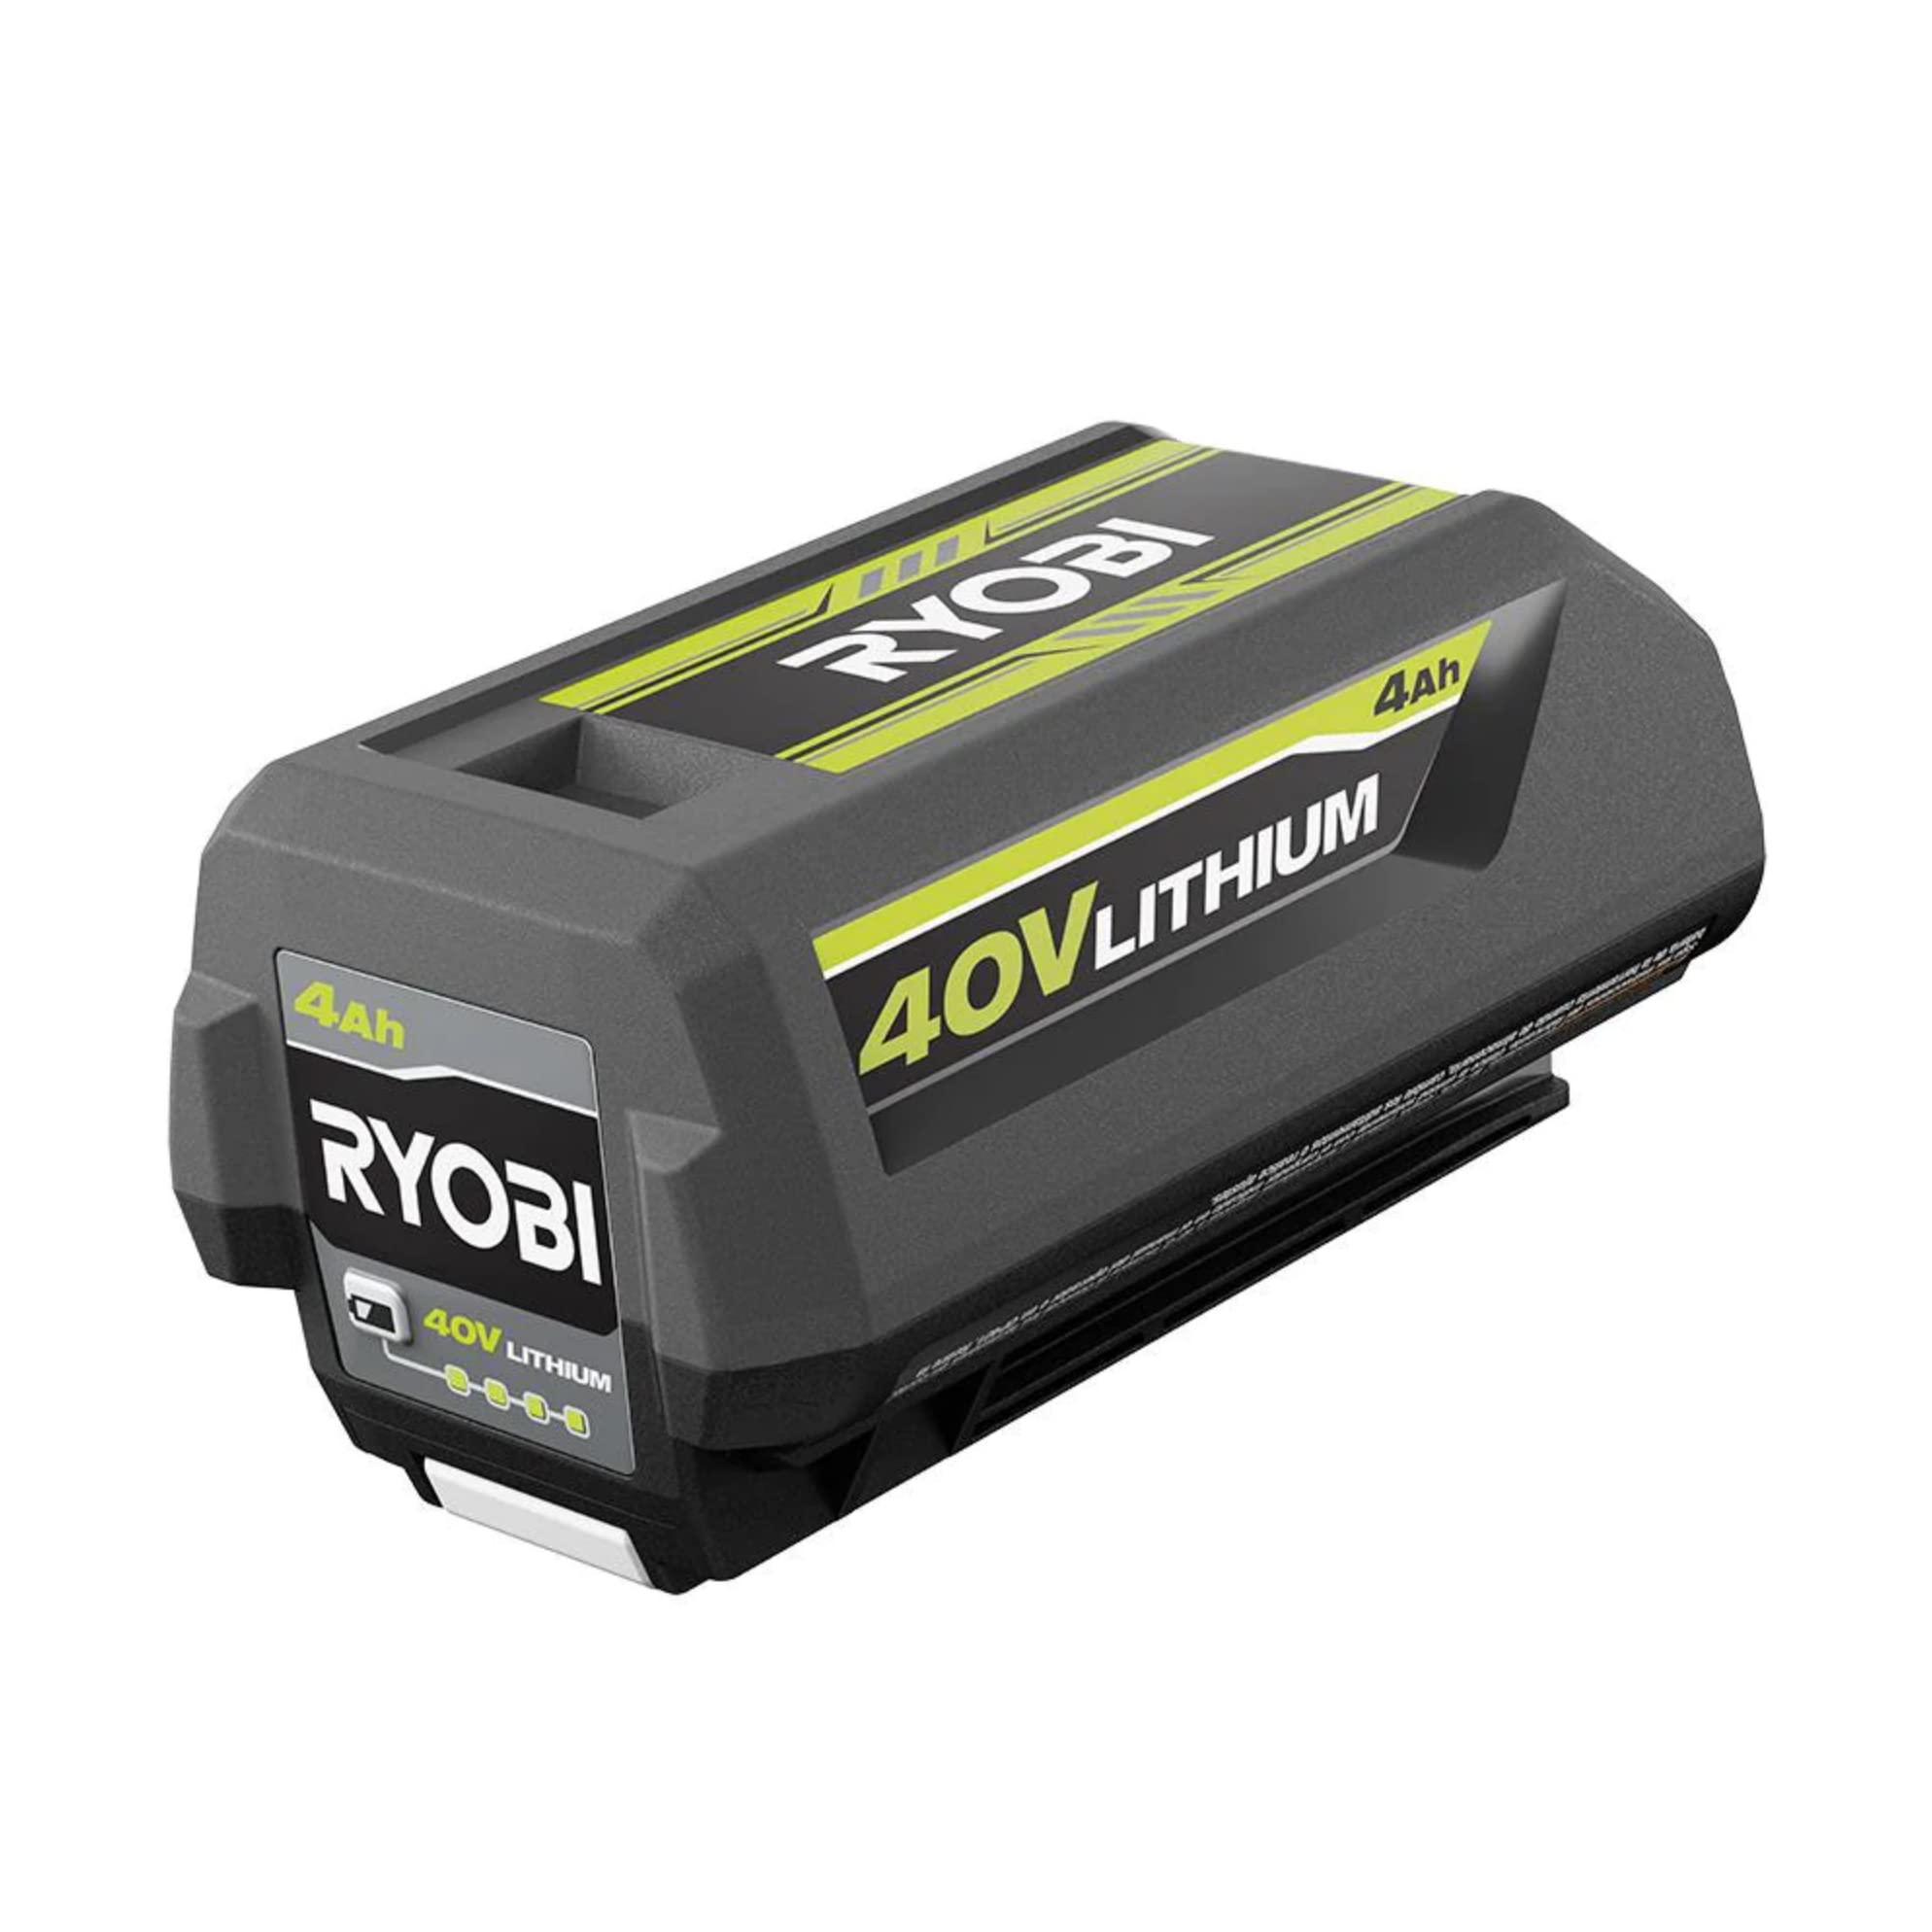 Ryobi 40V 4.0 Ah लिथियम-आयन बैटरी OP4040...